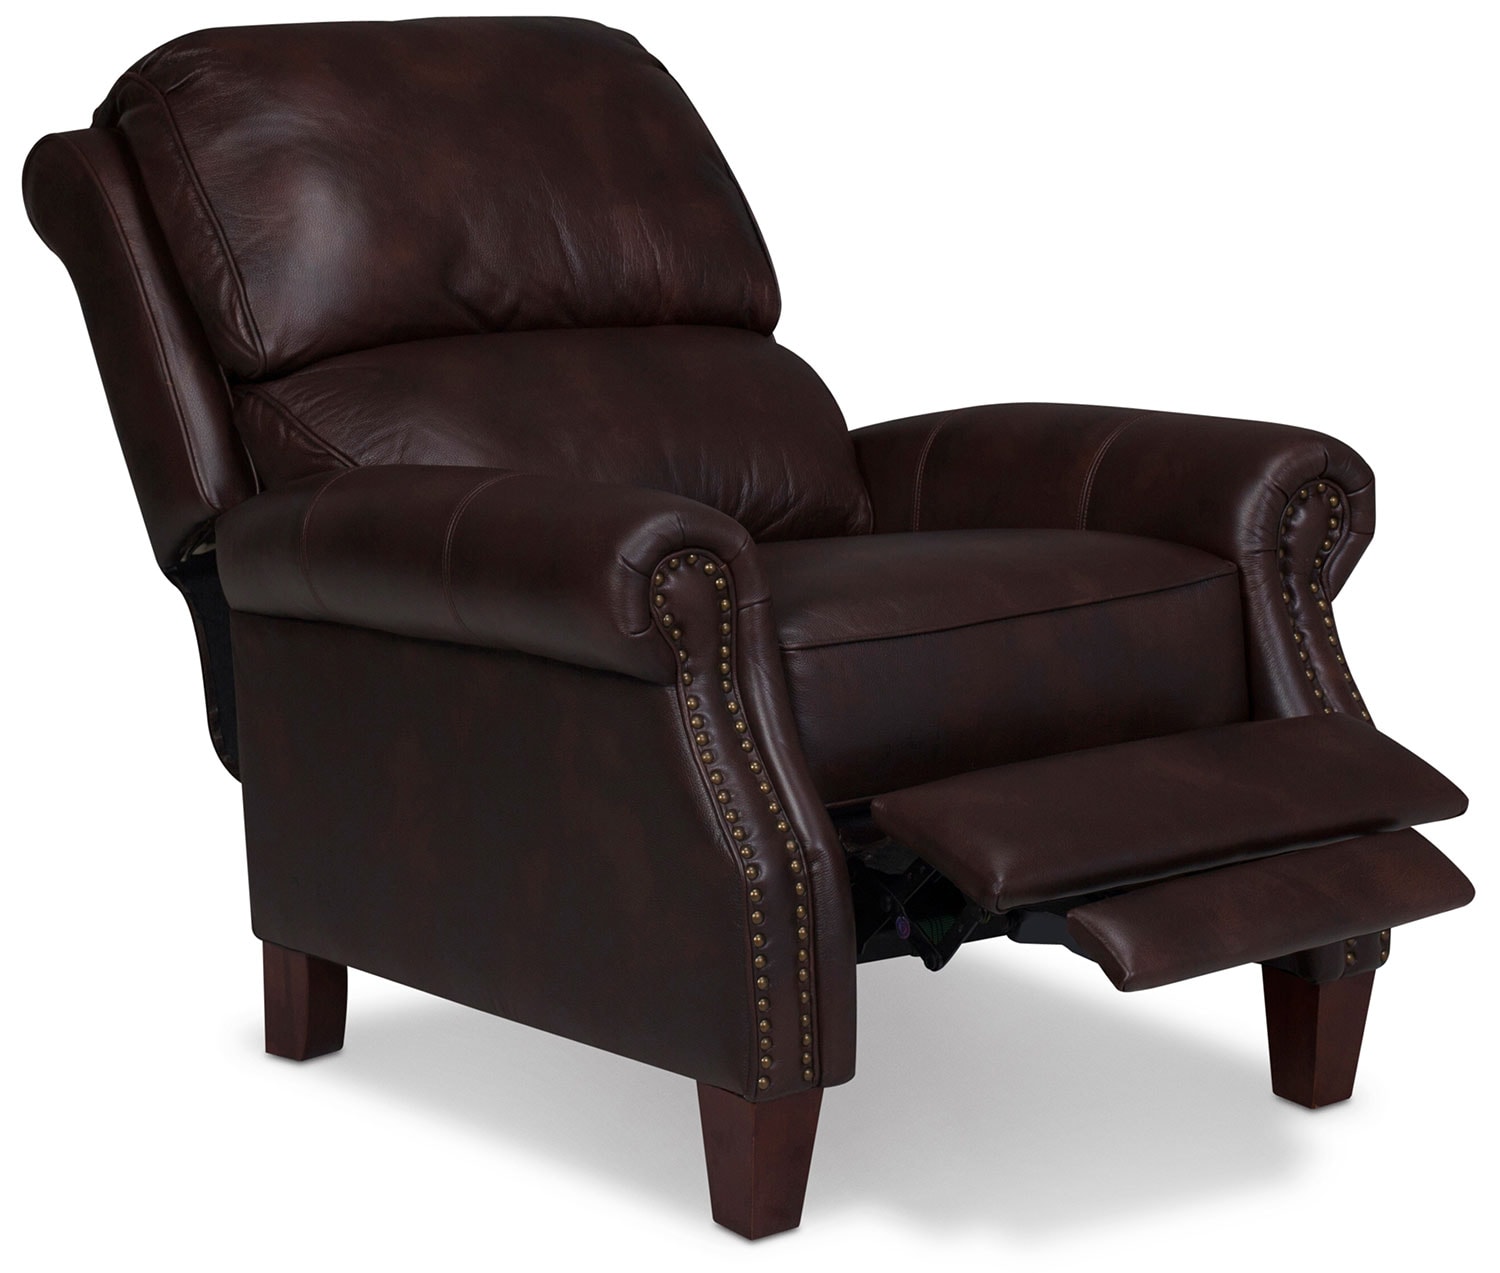 Canelo High-Leg Recliner - Espresso | Levin Furniture